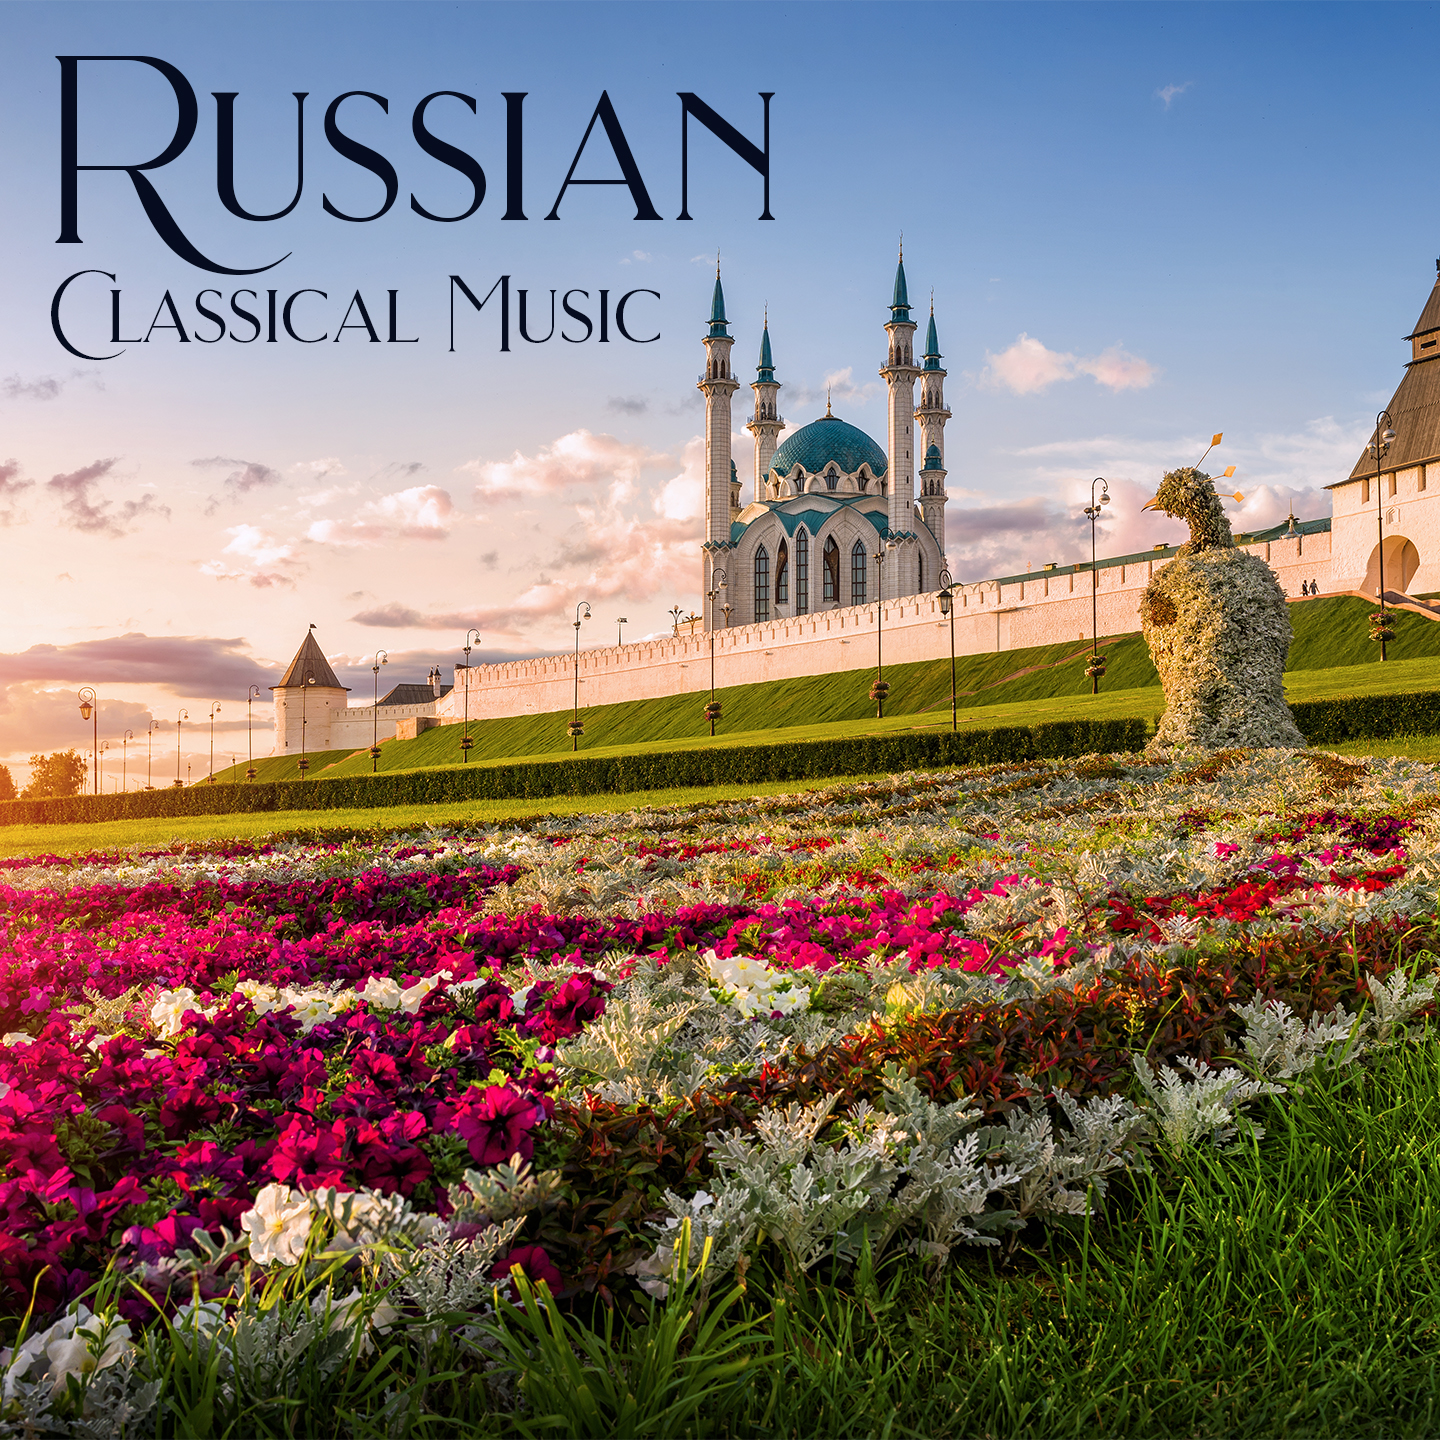 Russian Classical Music